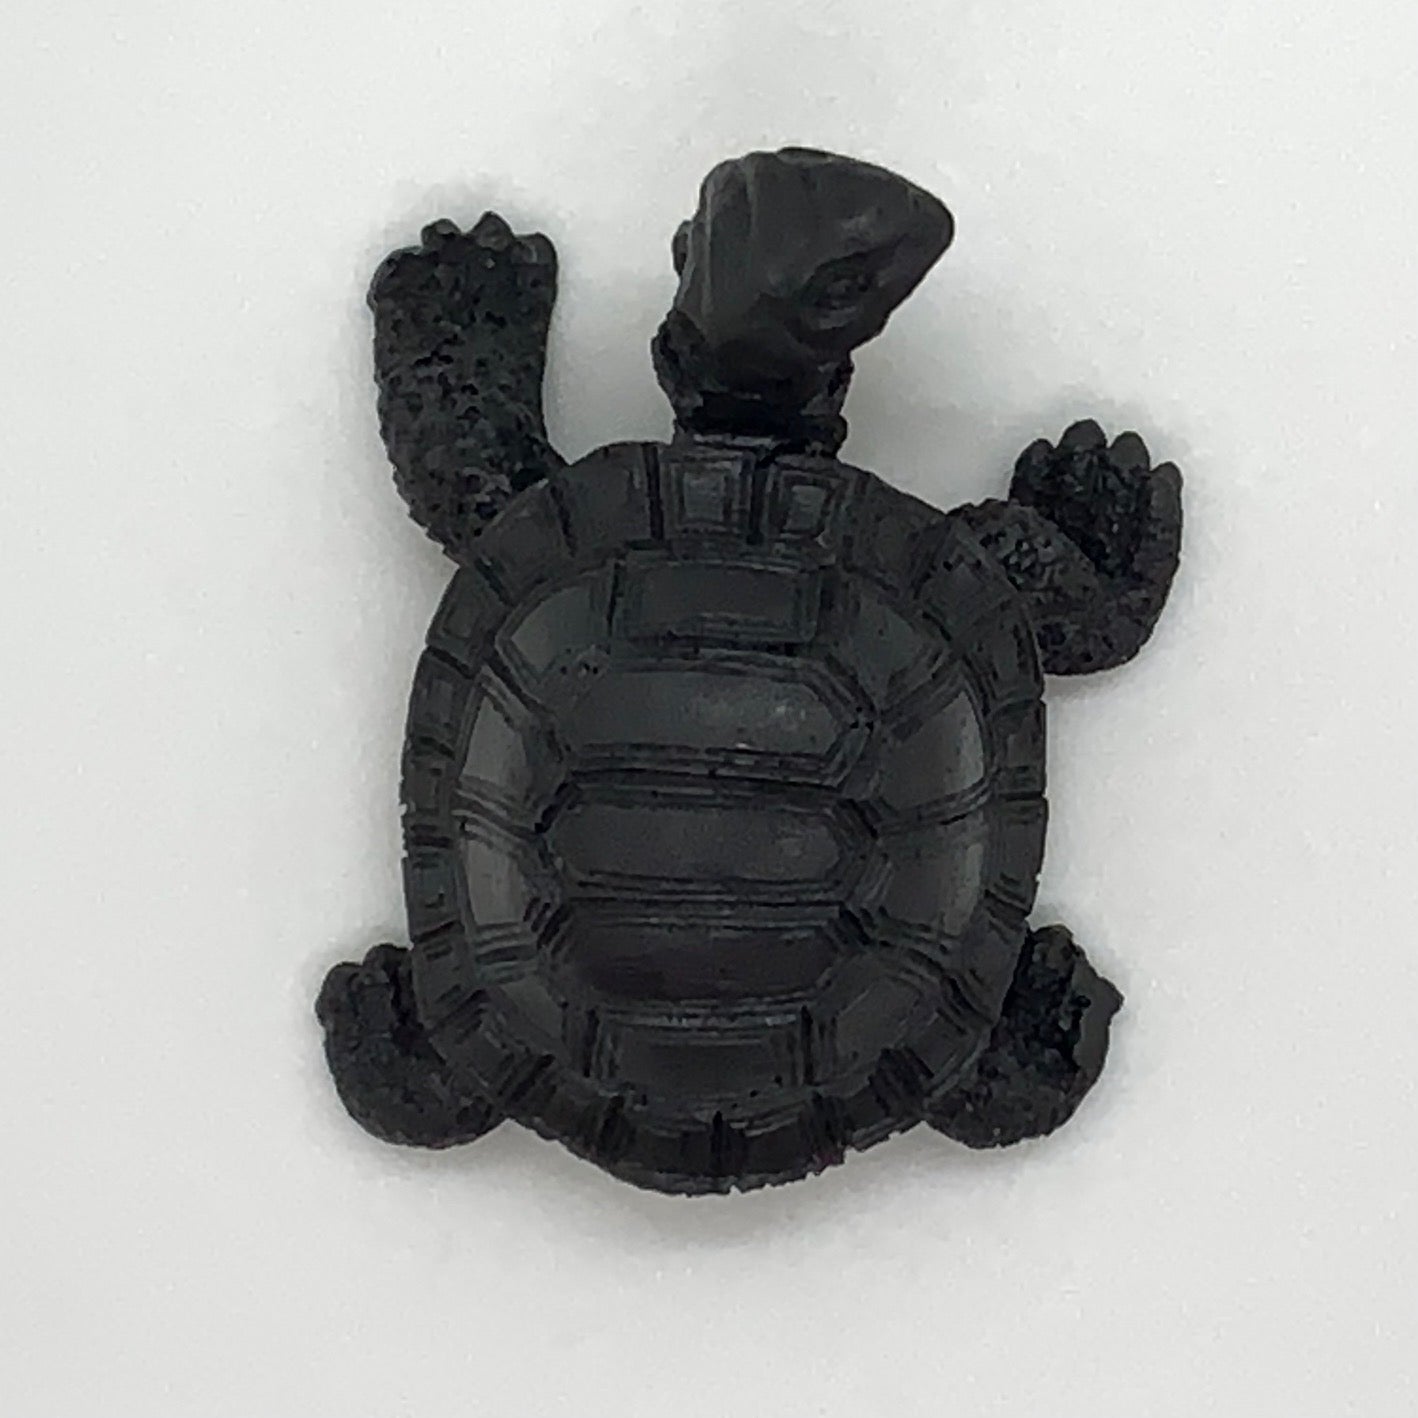 Turtle - Shungite Figurine - Made with a press